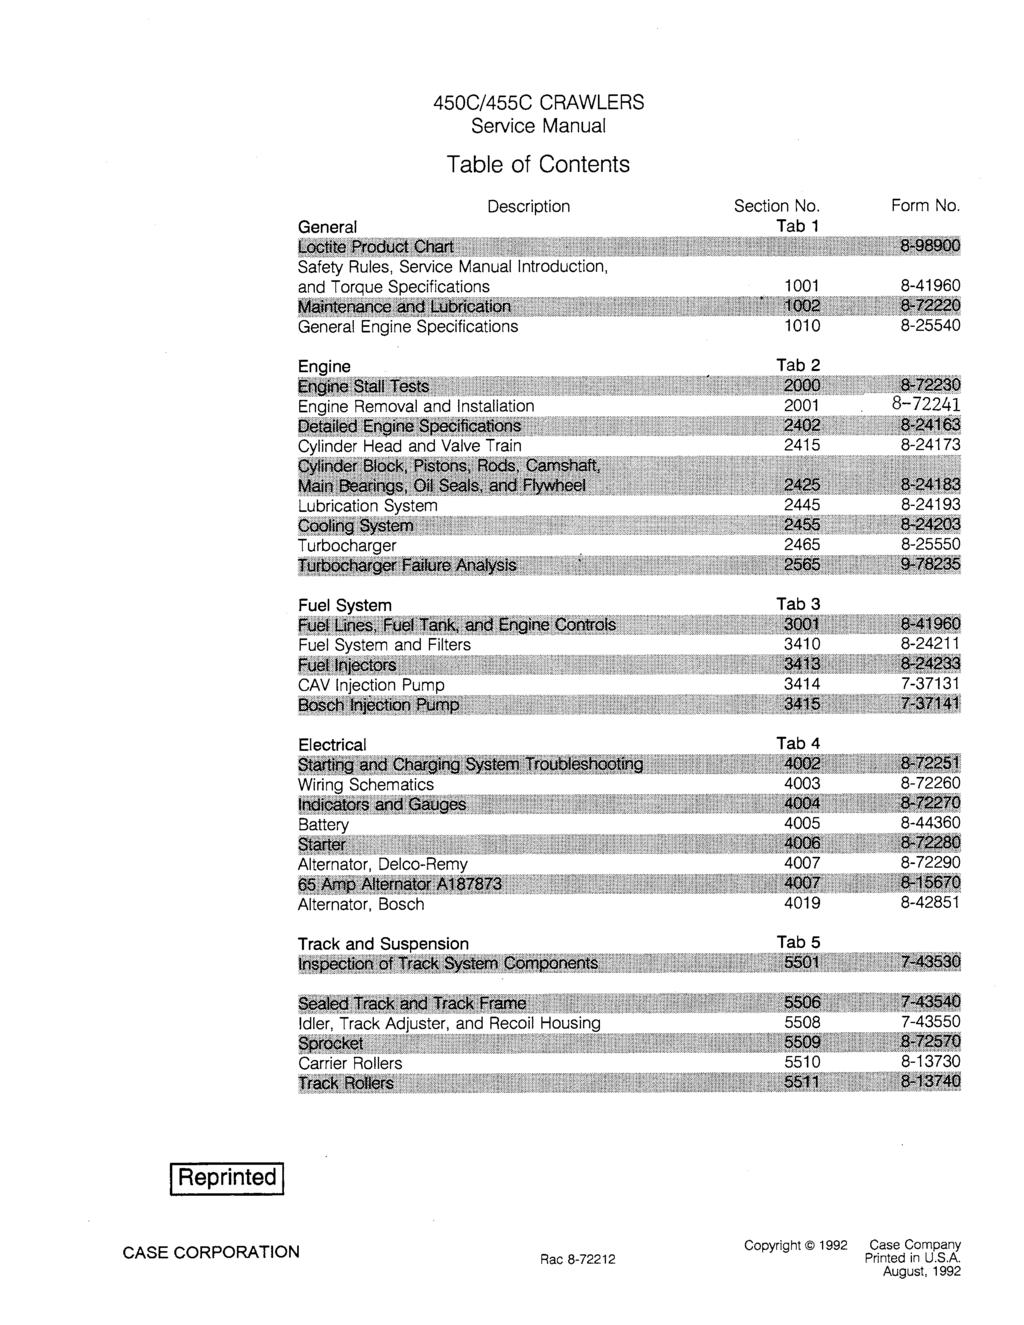 450C/455C CRAWLERS Service Manual Table of Contents Description General llilillllllllllll!llllll!lill&.